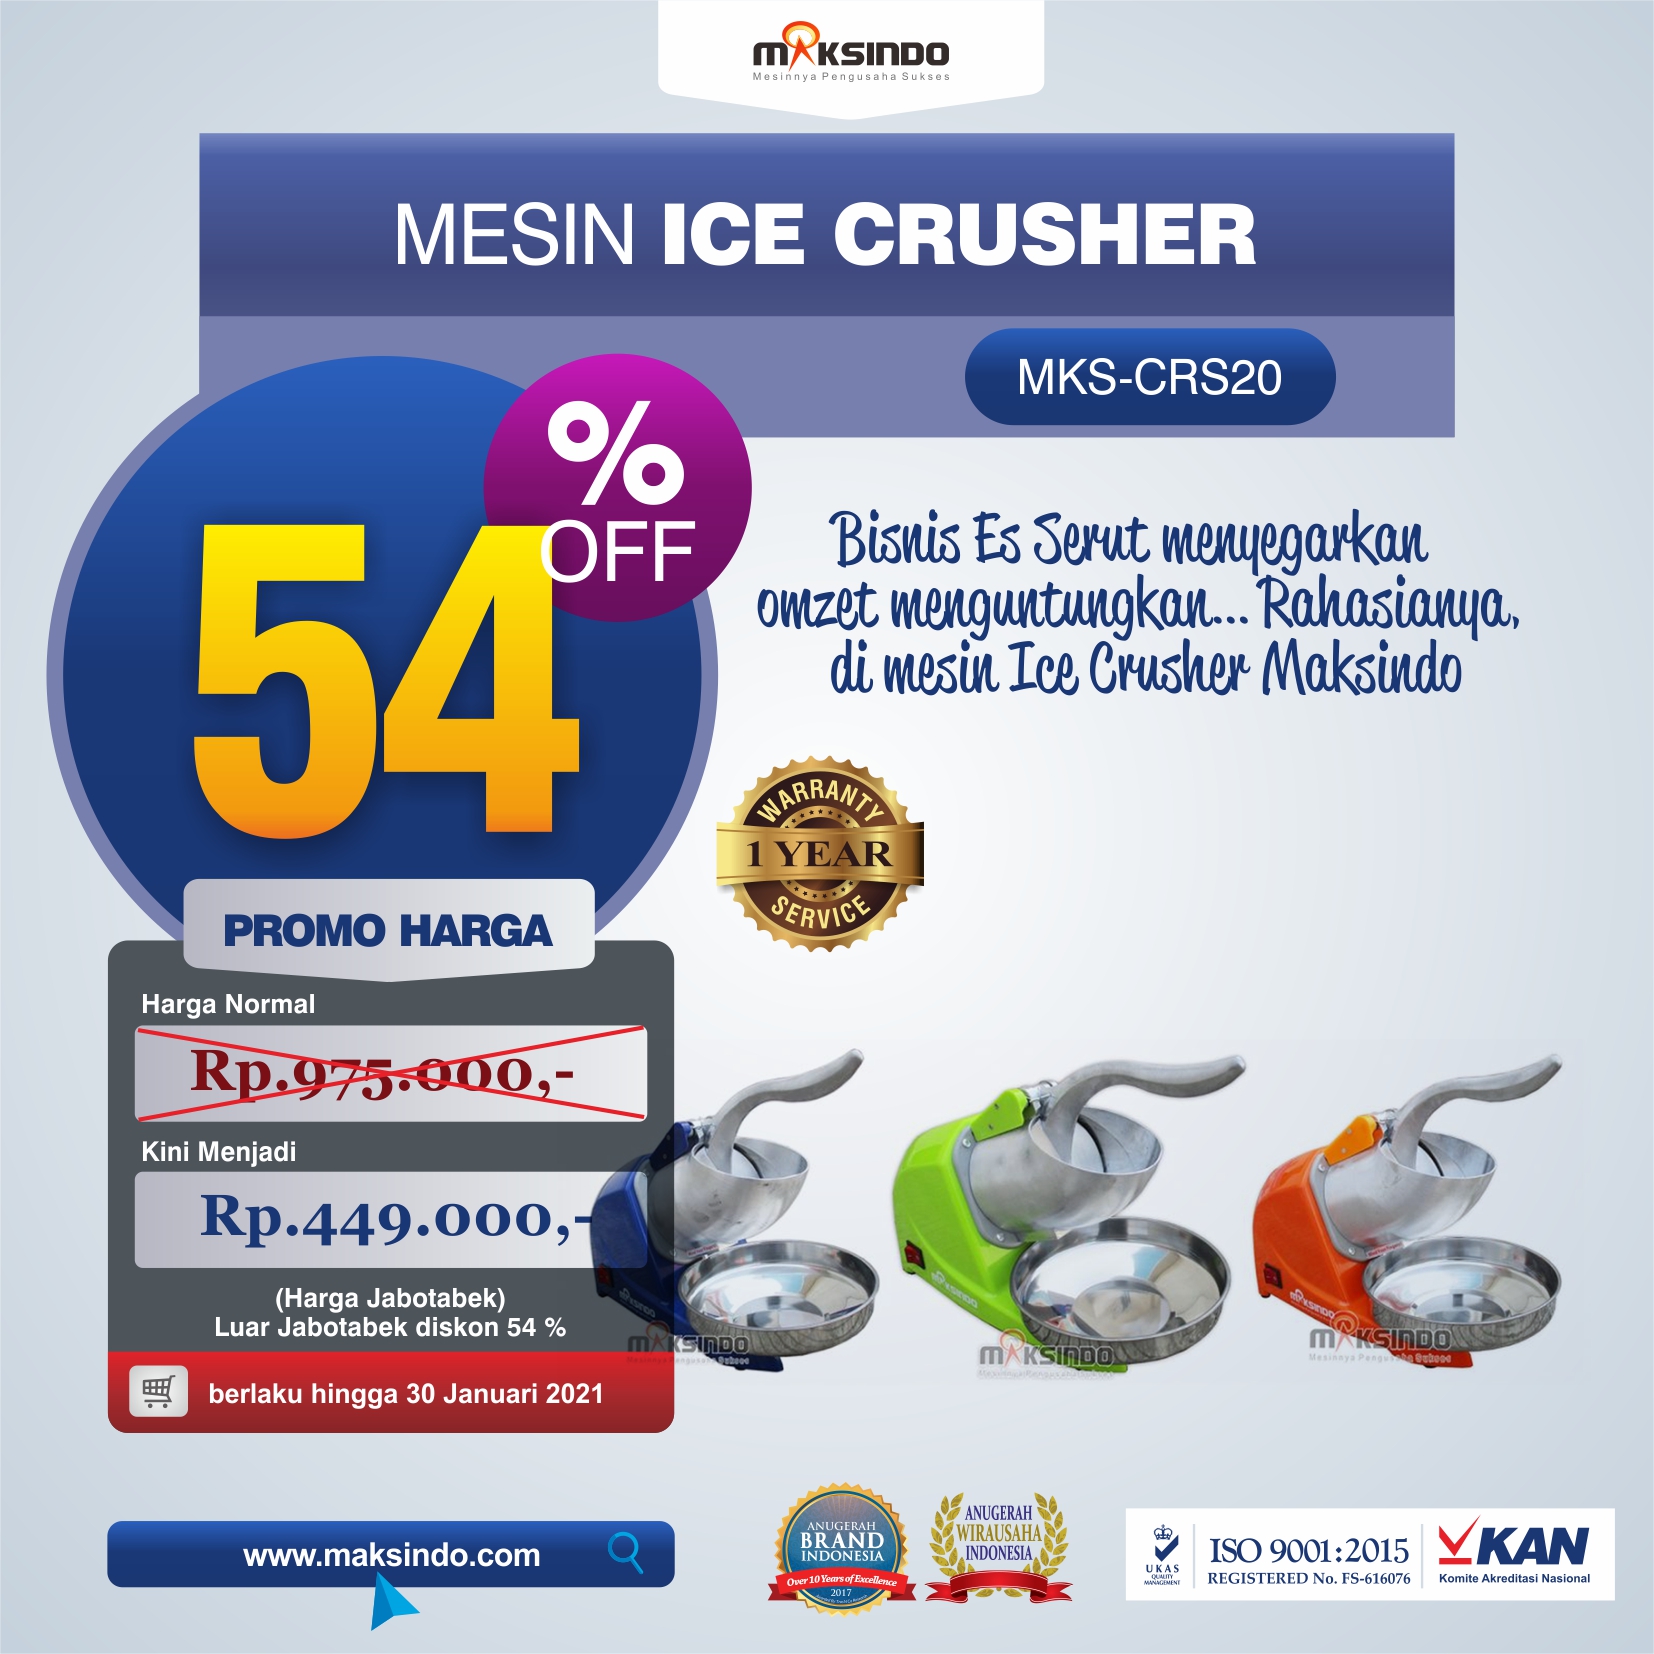 Mesin Ice Crusher MKS-CRS20